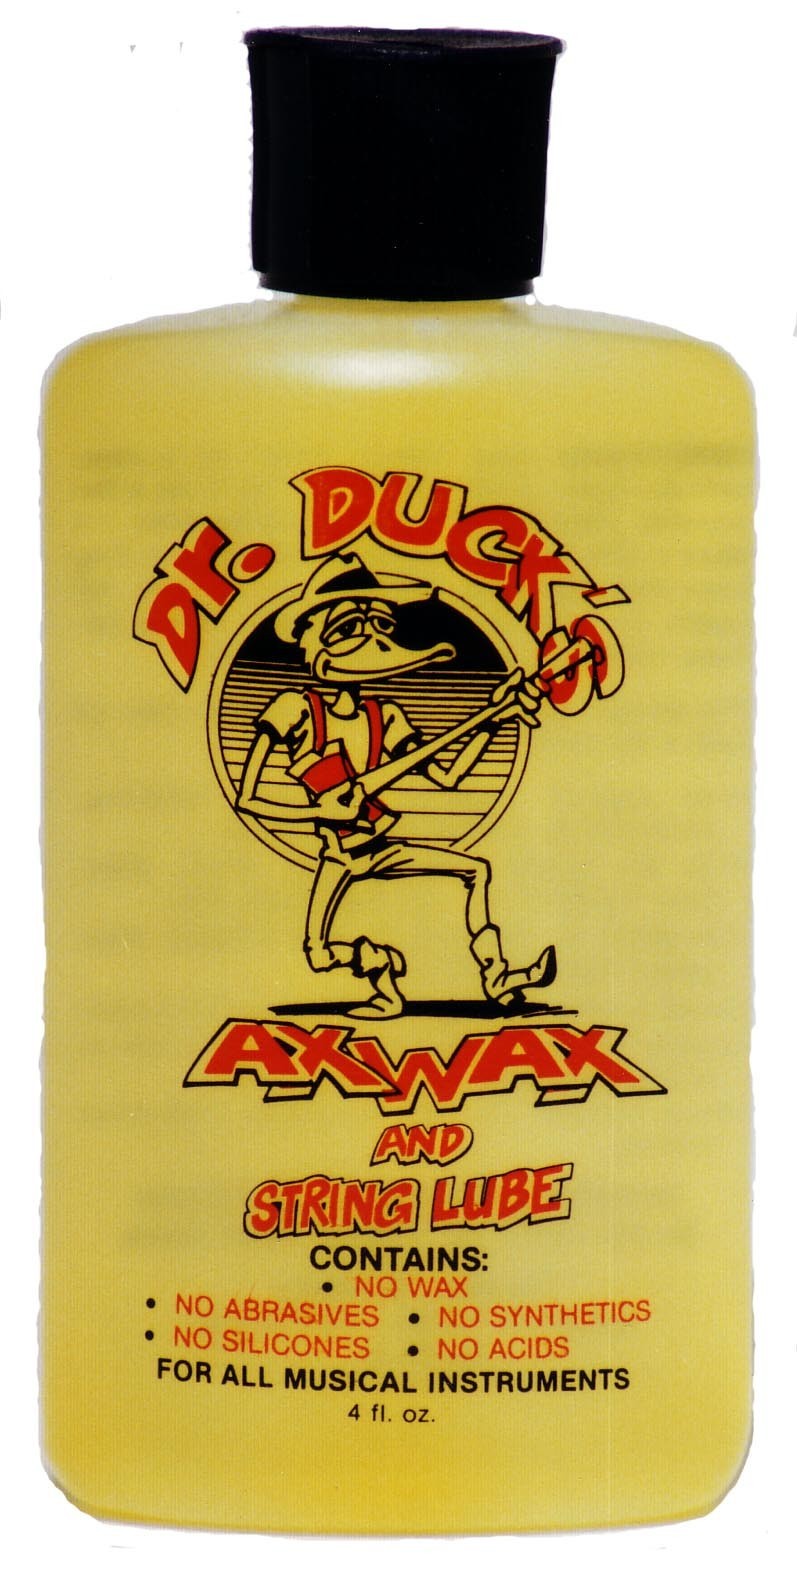 Ducks Deluxe Dr. Ducks Ax wax & String lube